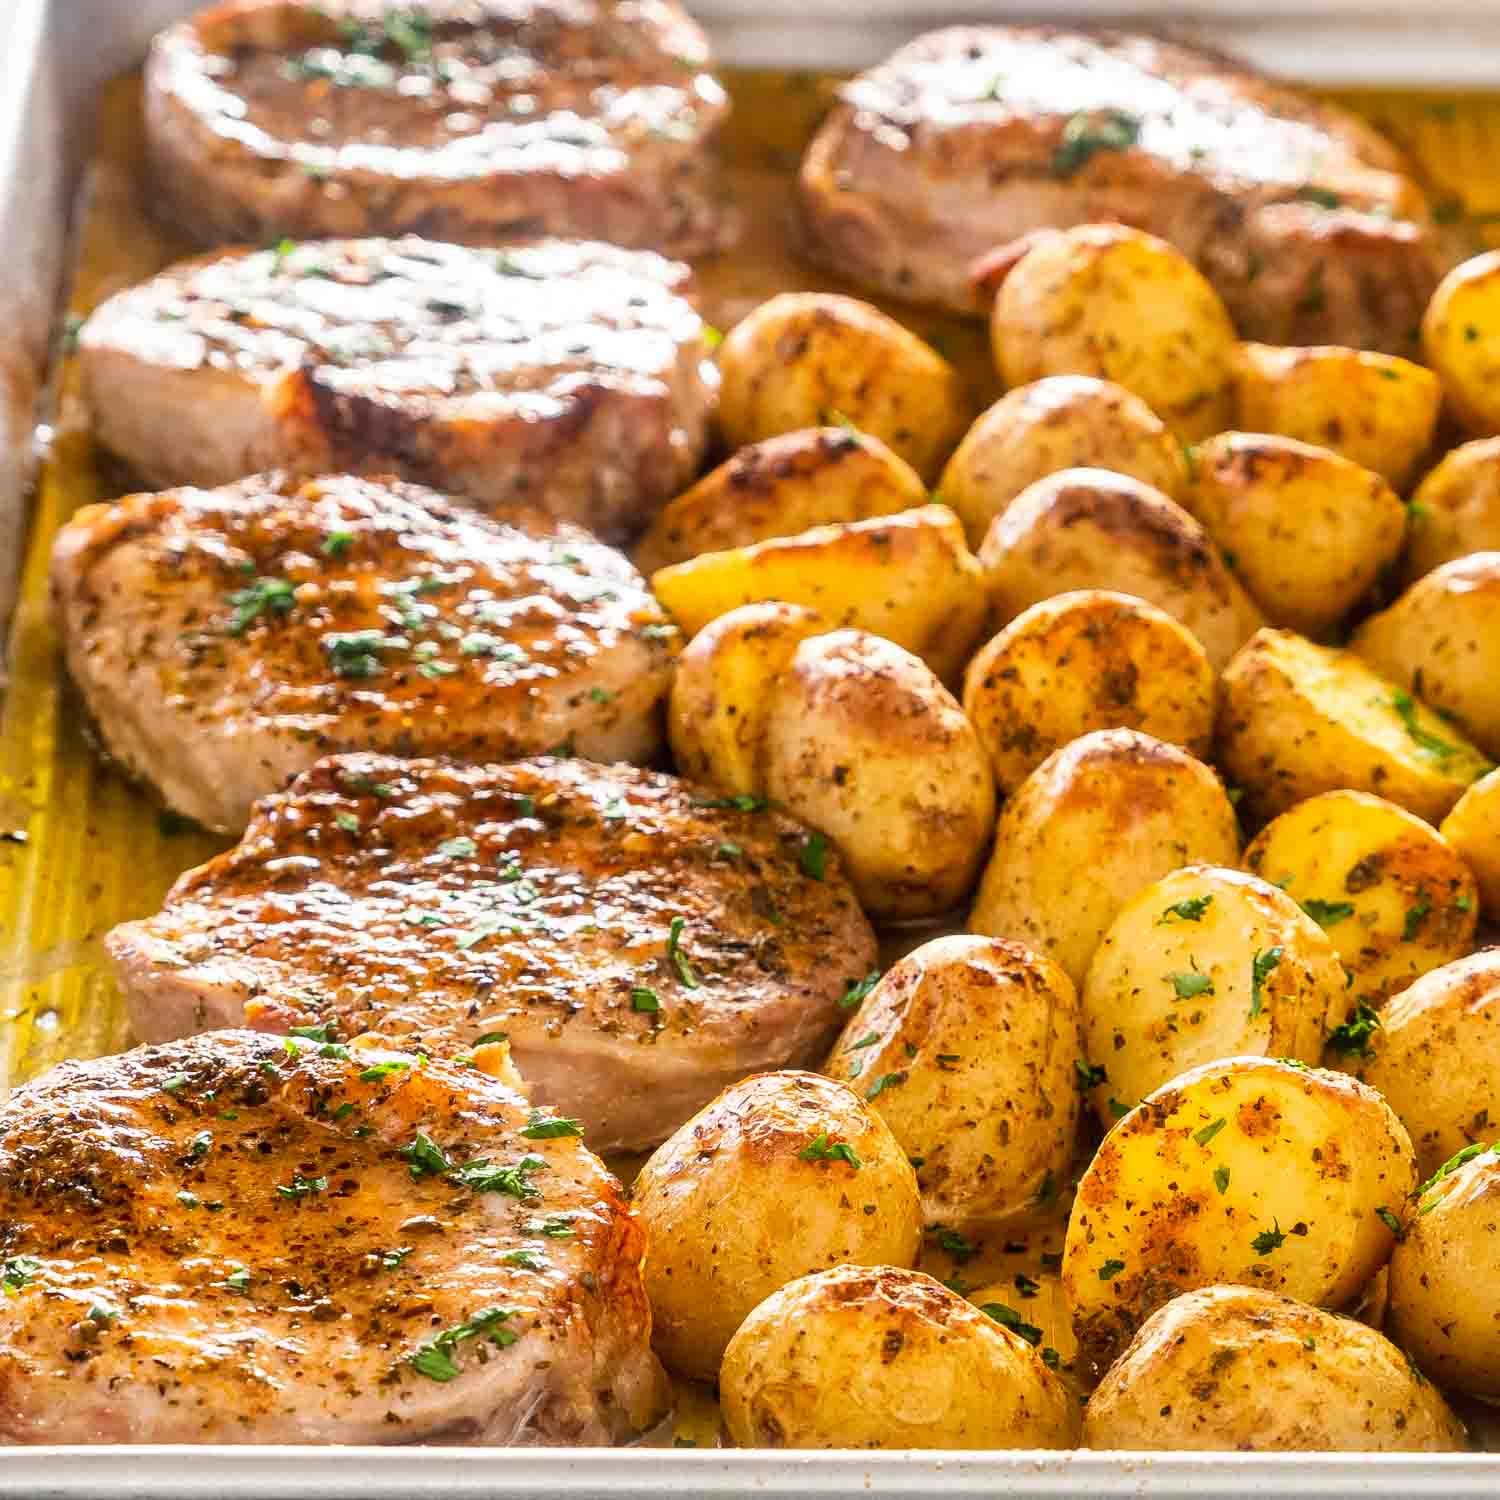 ranch pork chops and potatoes on a sheet pan.